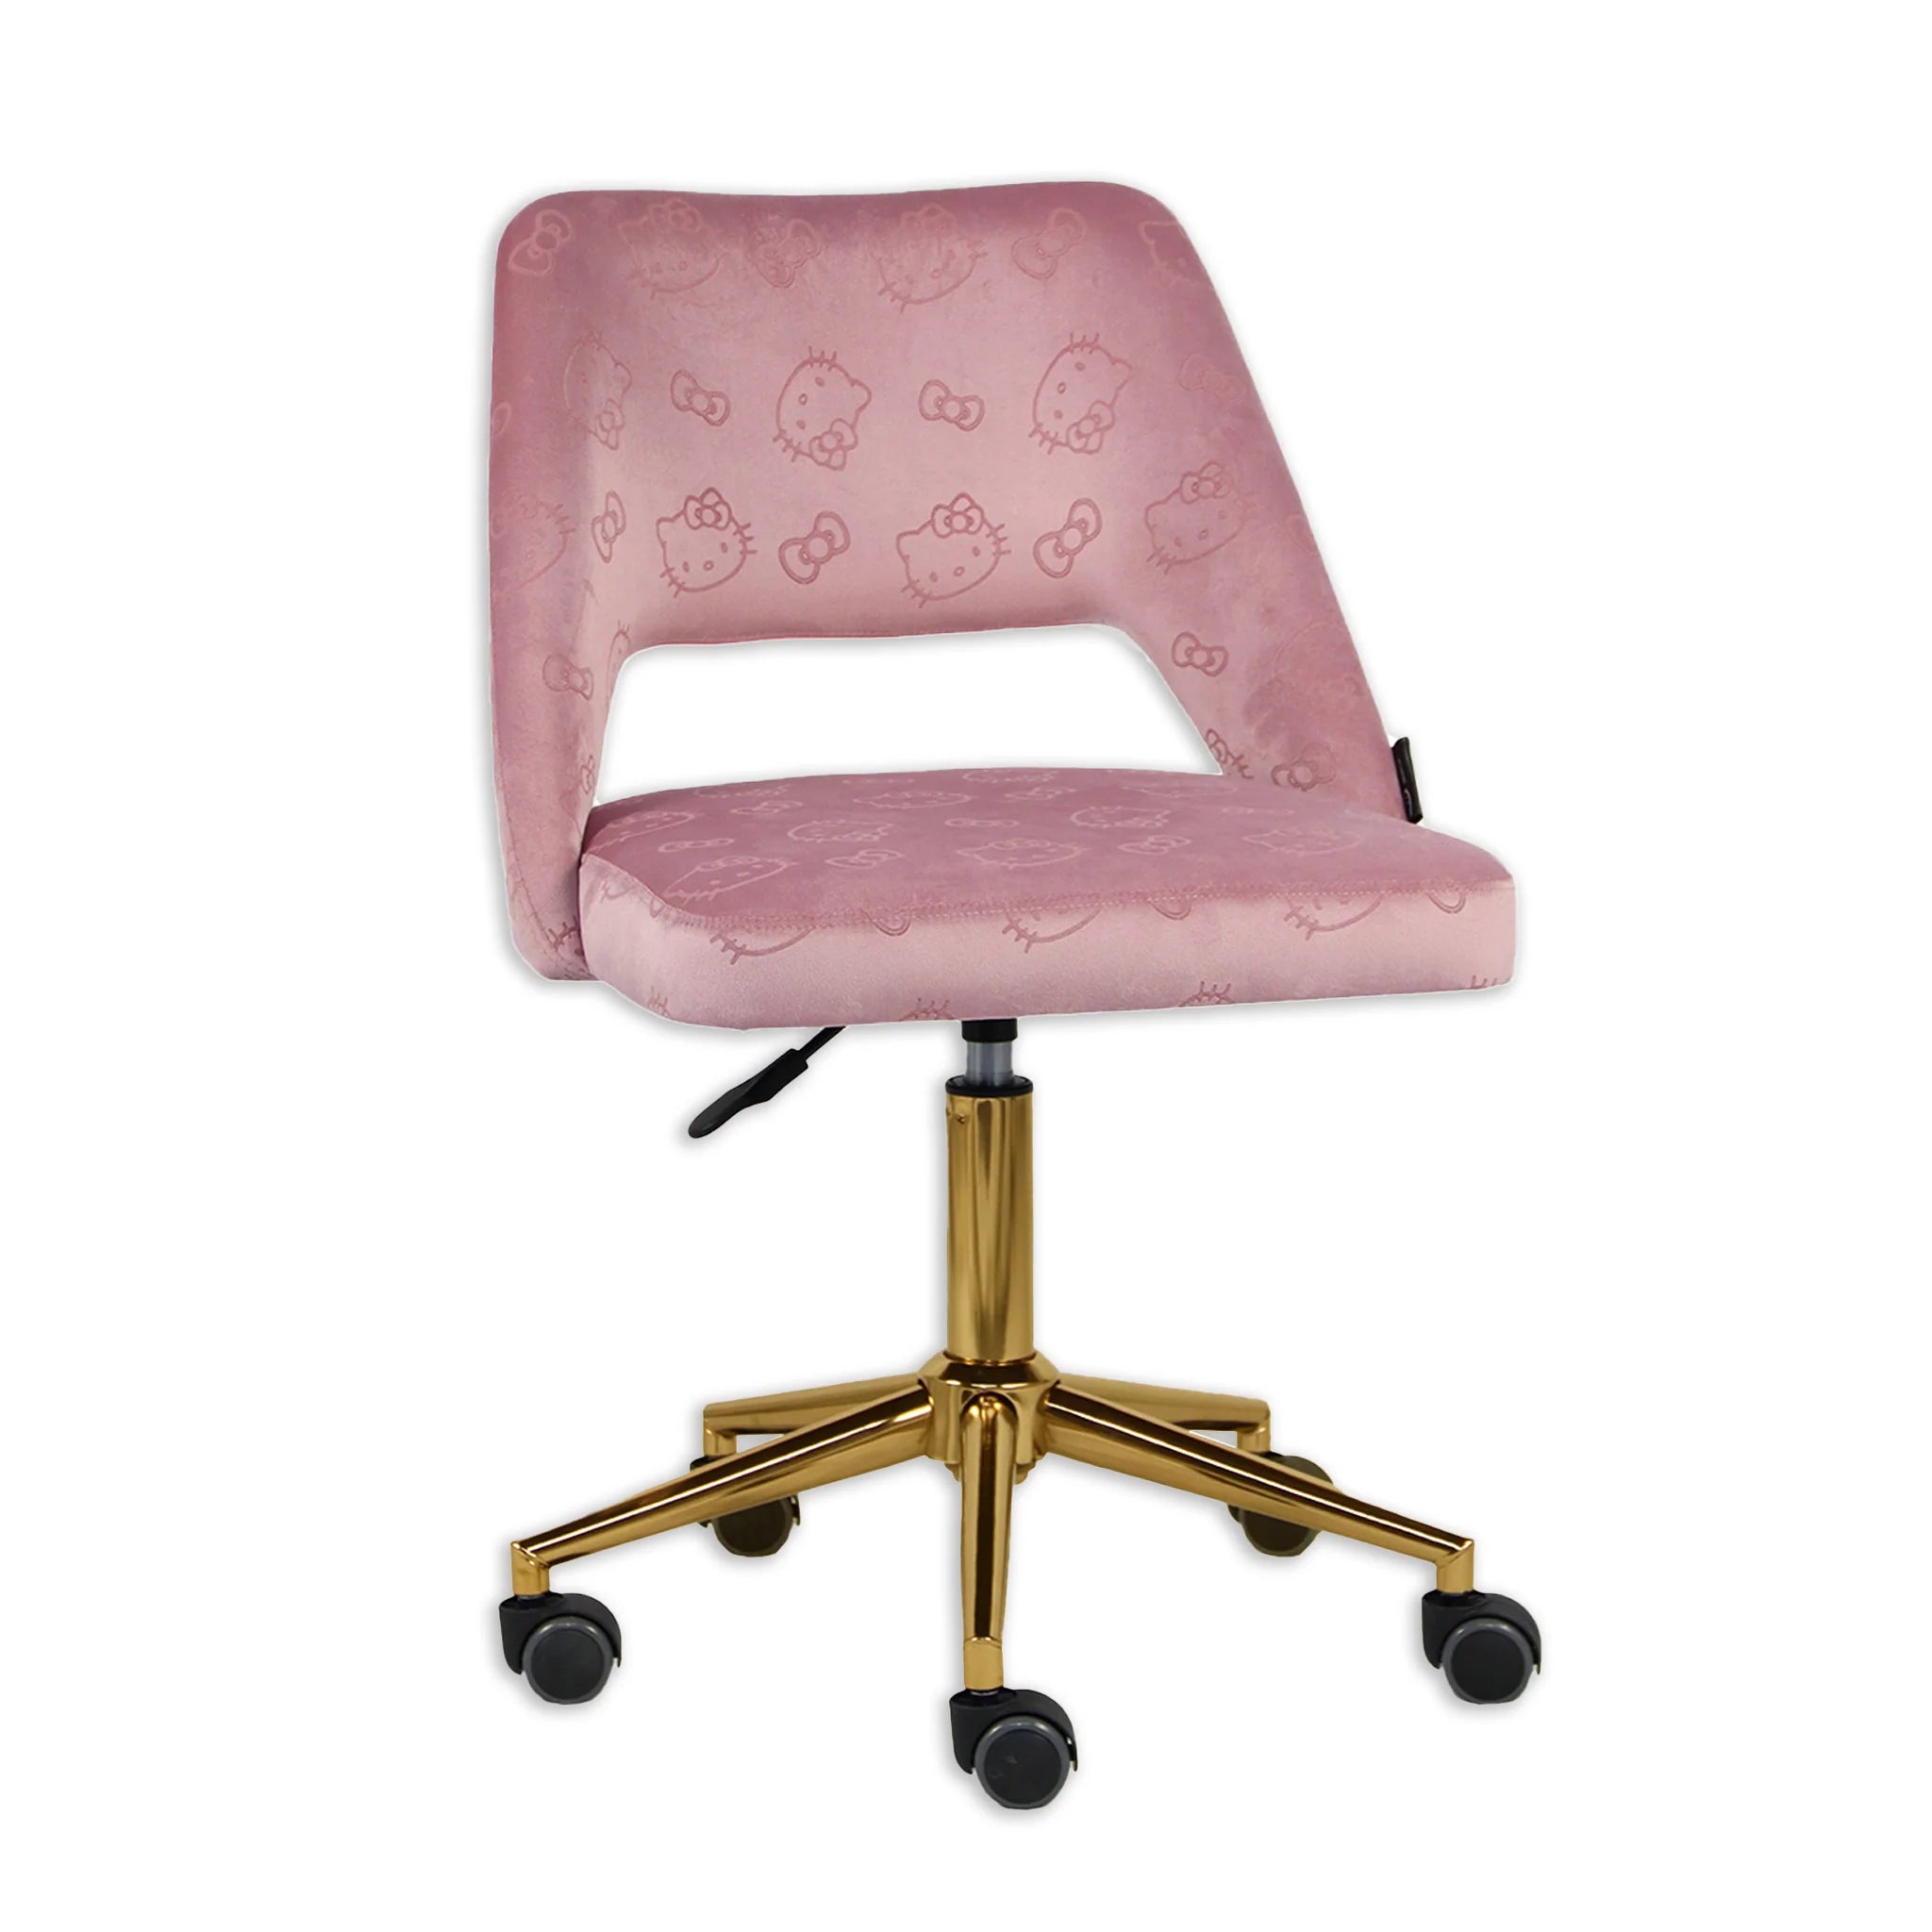 Impressions Vanity - Hello Kitty Vanity Swivel Chair Pink